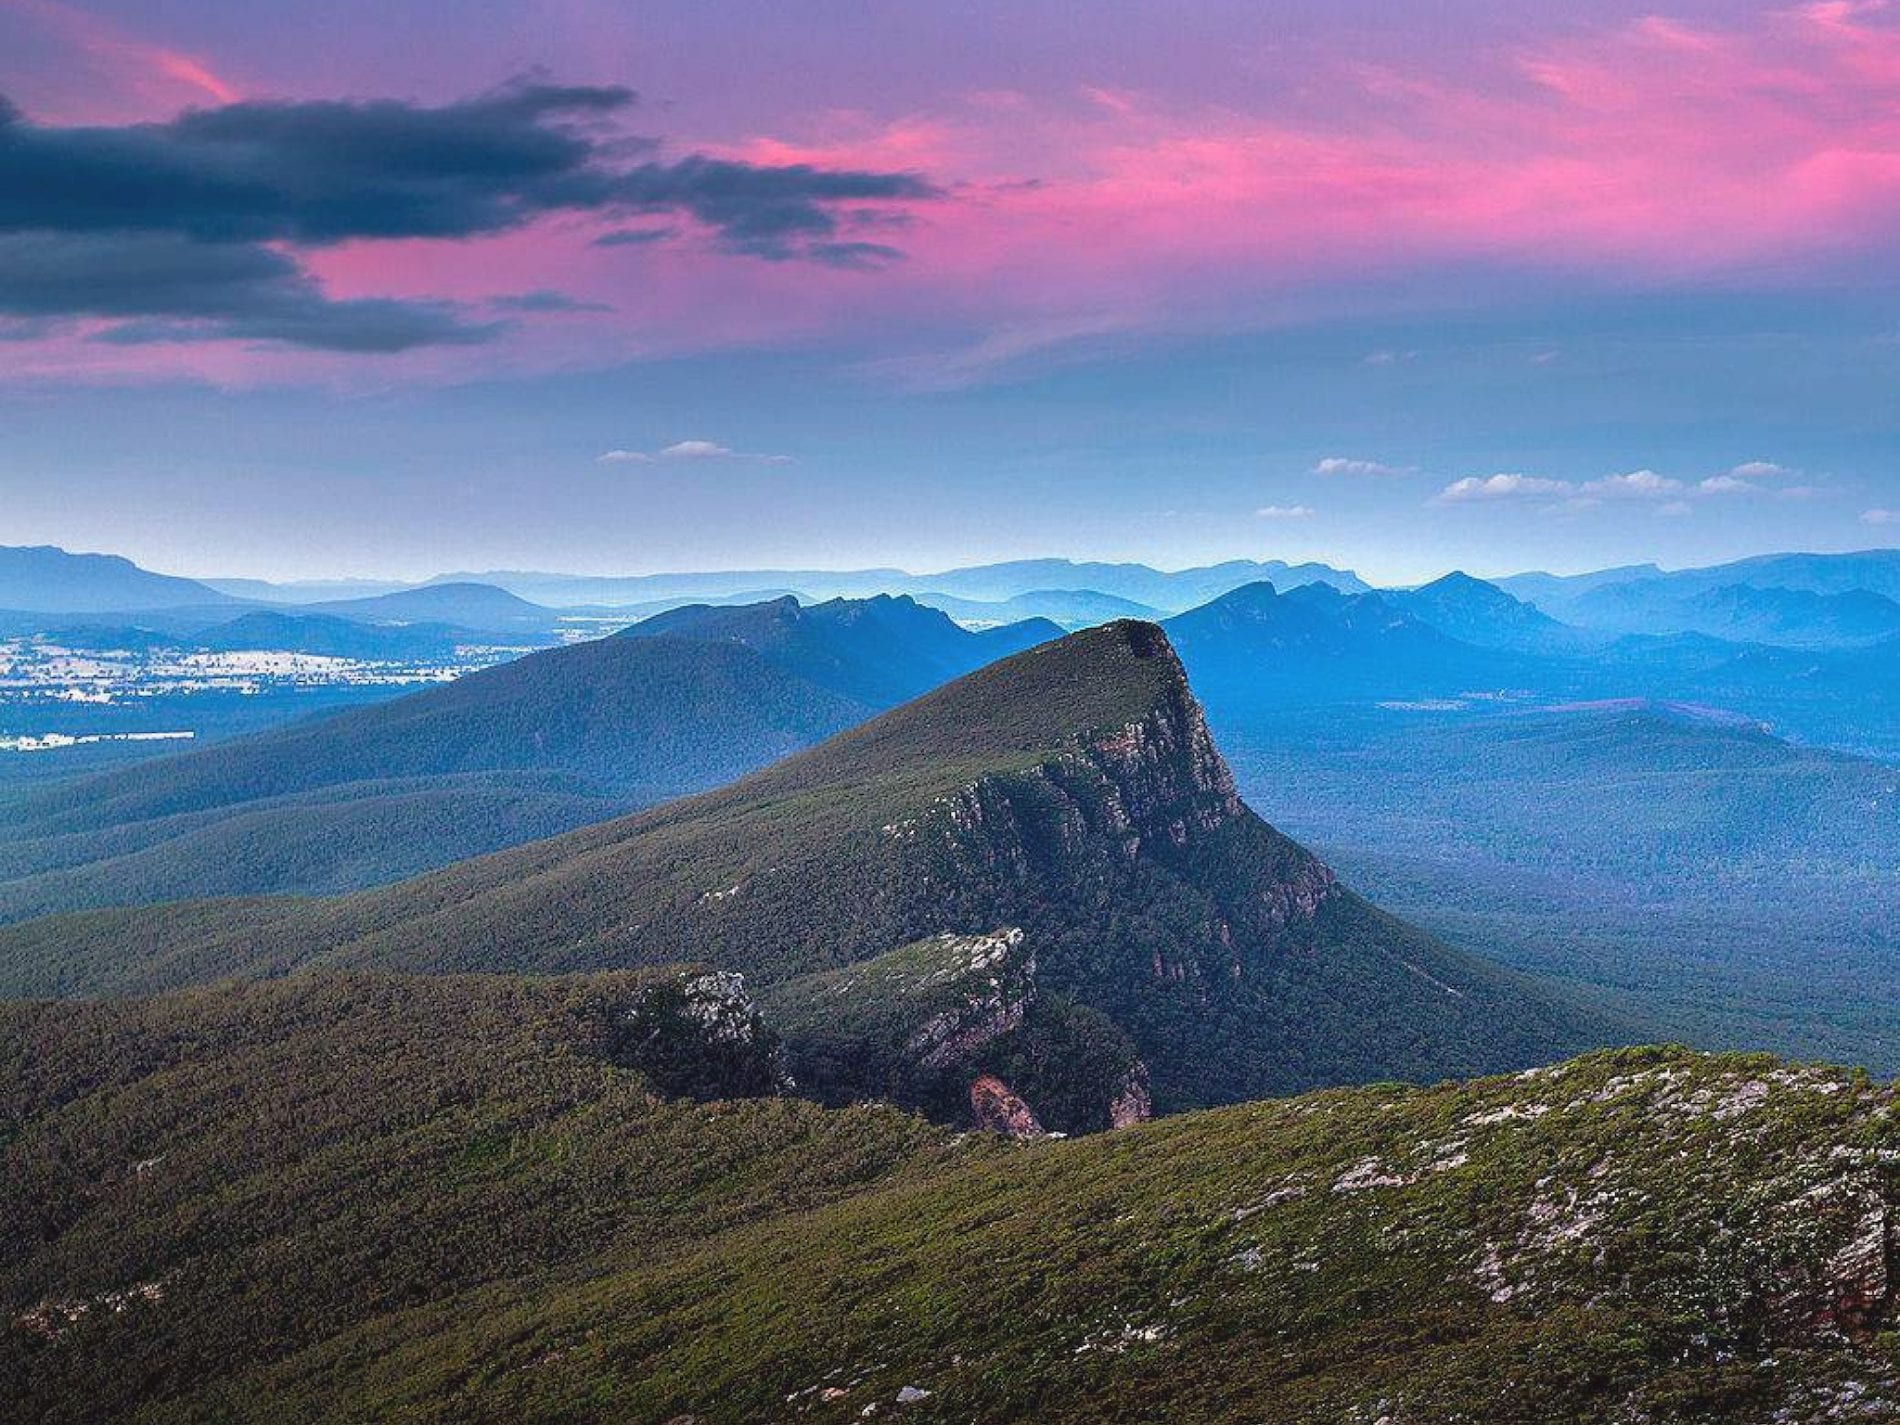 Australia's most inspiring wilderness campsites